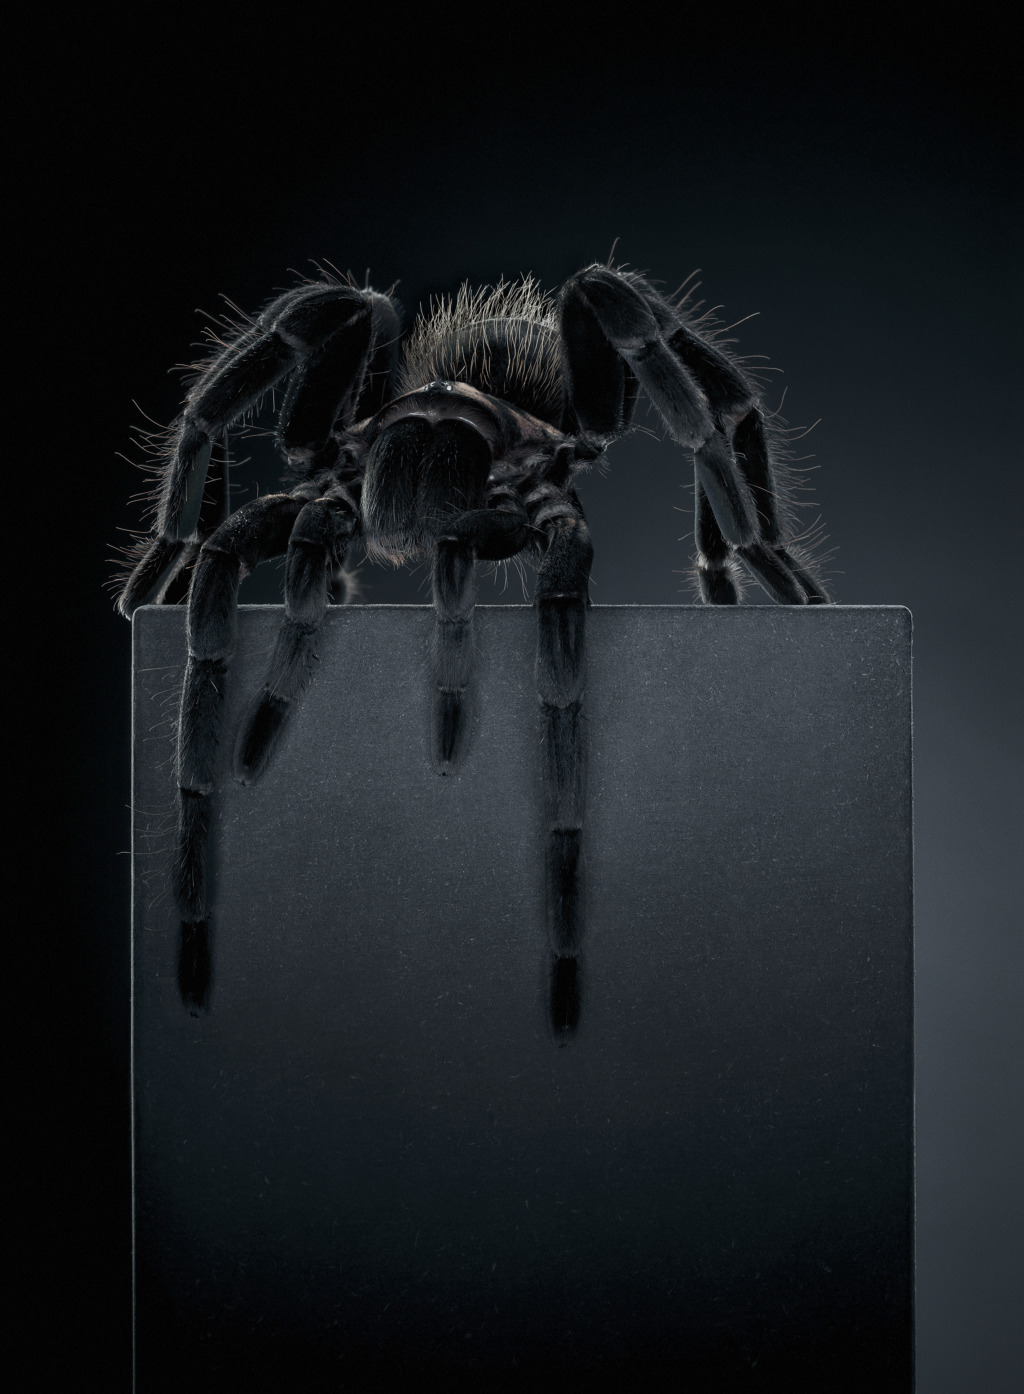 Peter Hebeisen
Tarantula, 2012, Pigment print on Archival paper, 218 x 160 cm | 112 x 153 cm